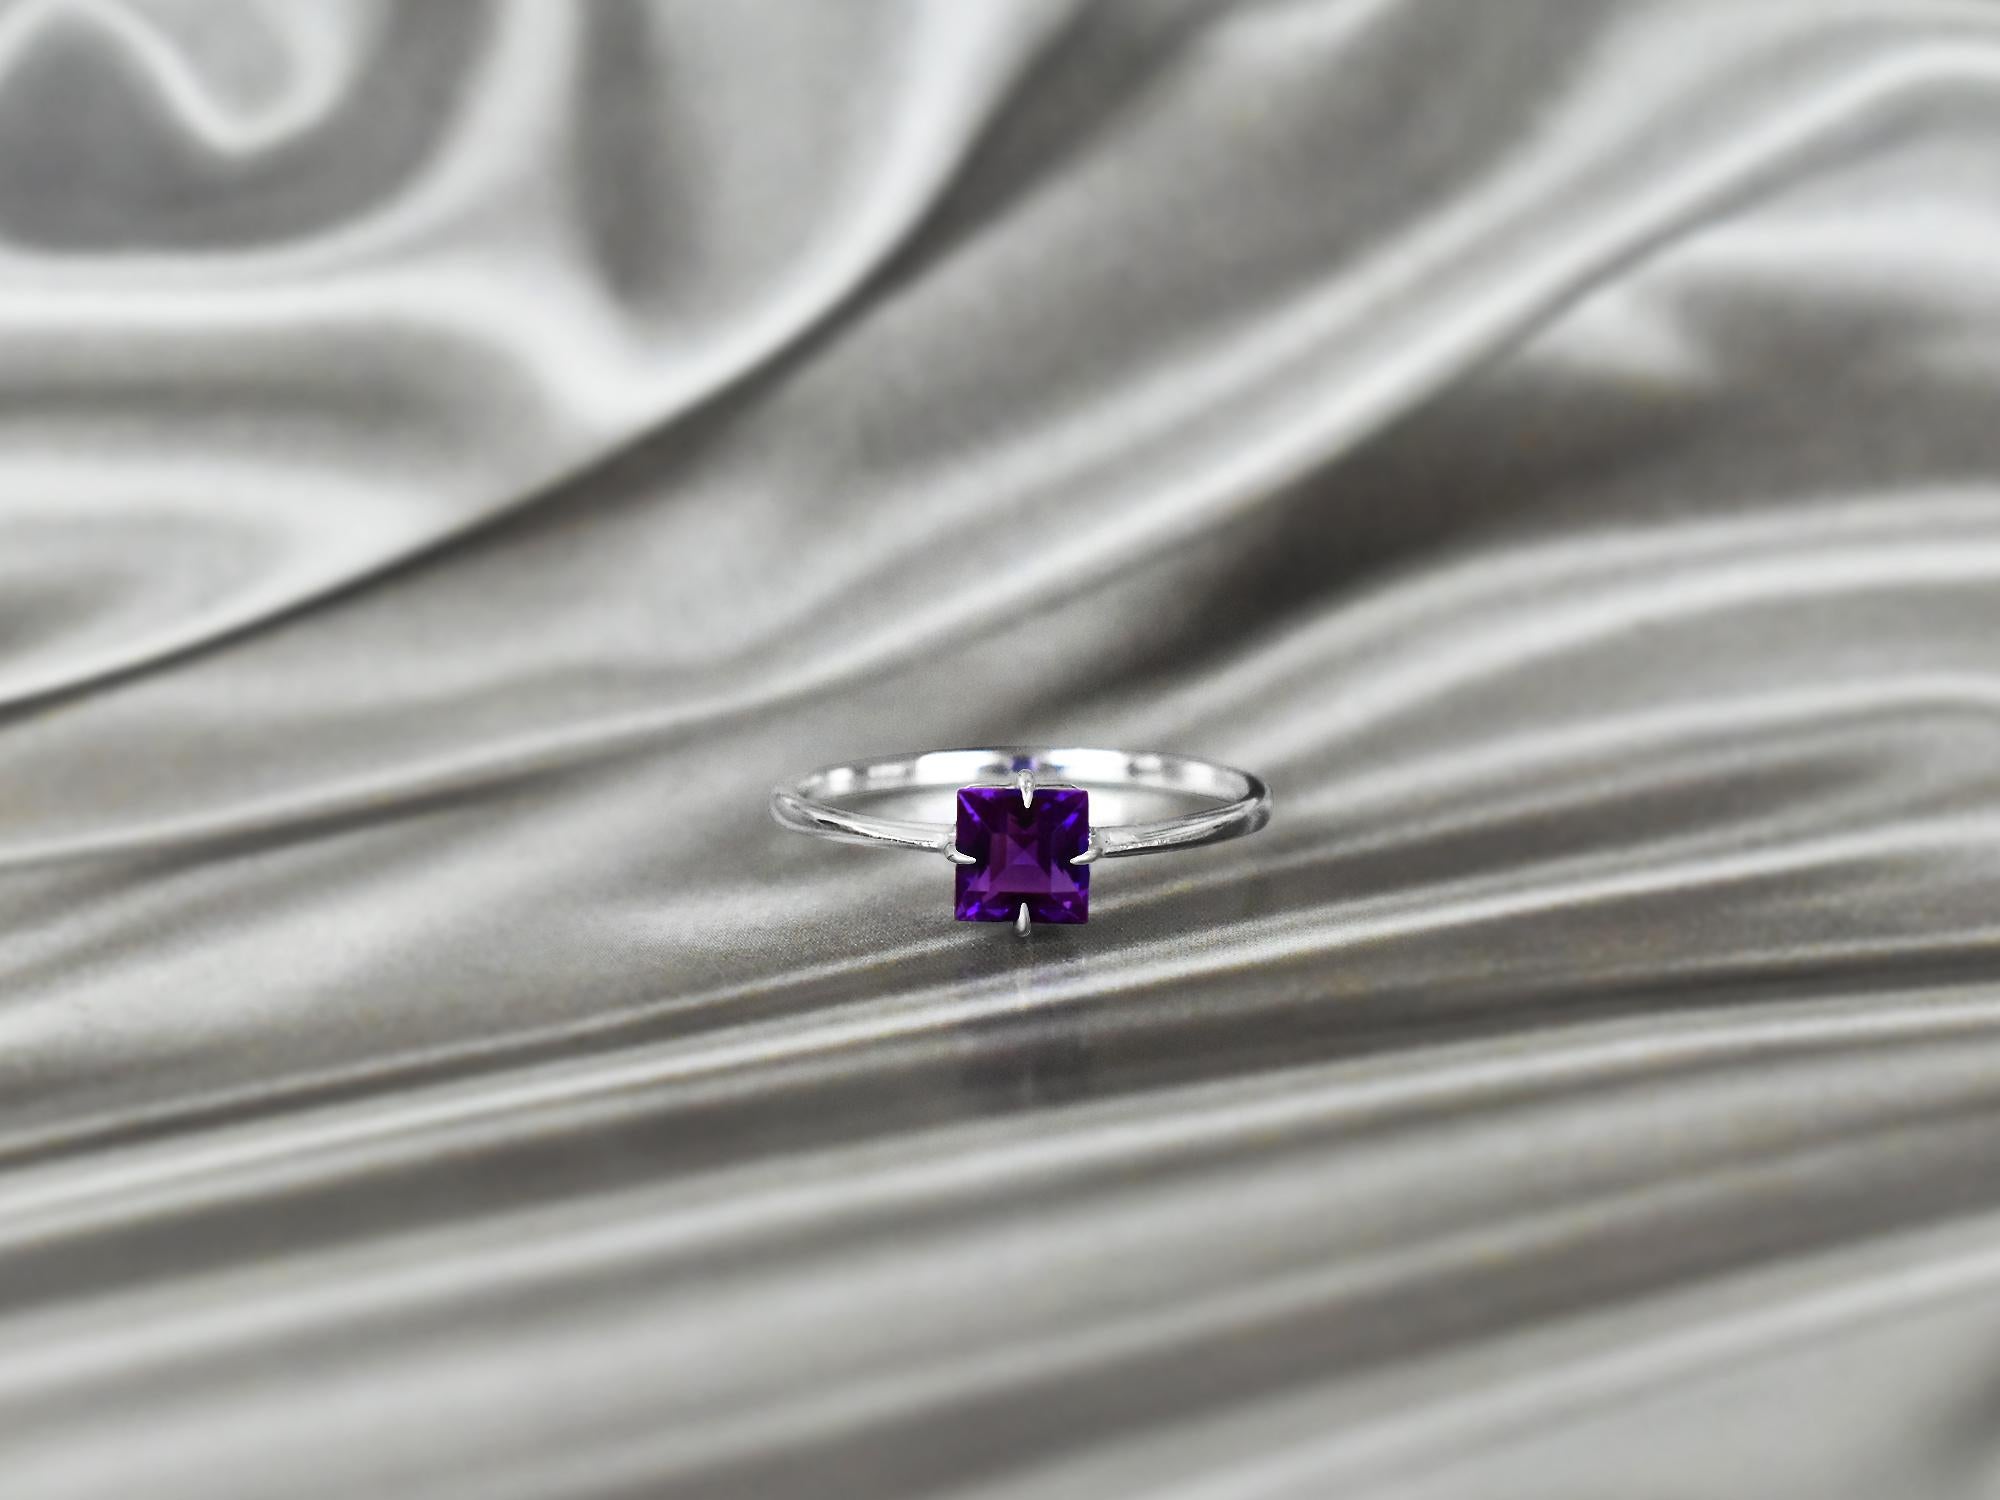 For Sale:  10k Gold Princess Cut 5x5 mm Princess Cut Gemstone Ring Gemstone Engagement Ring 4